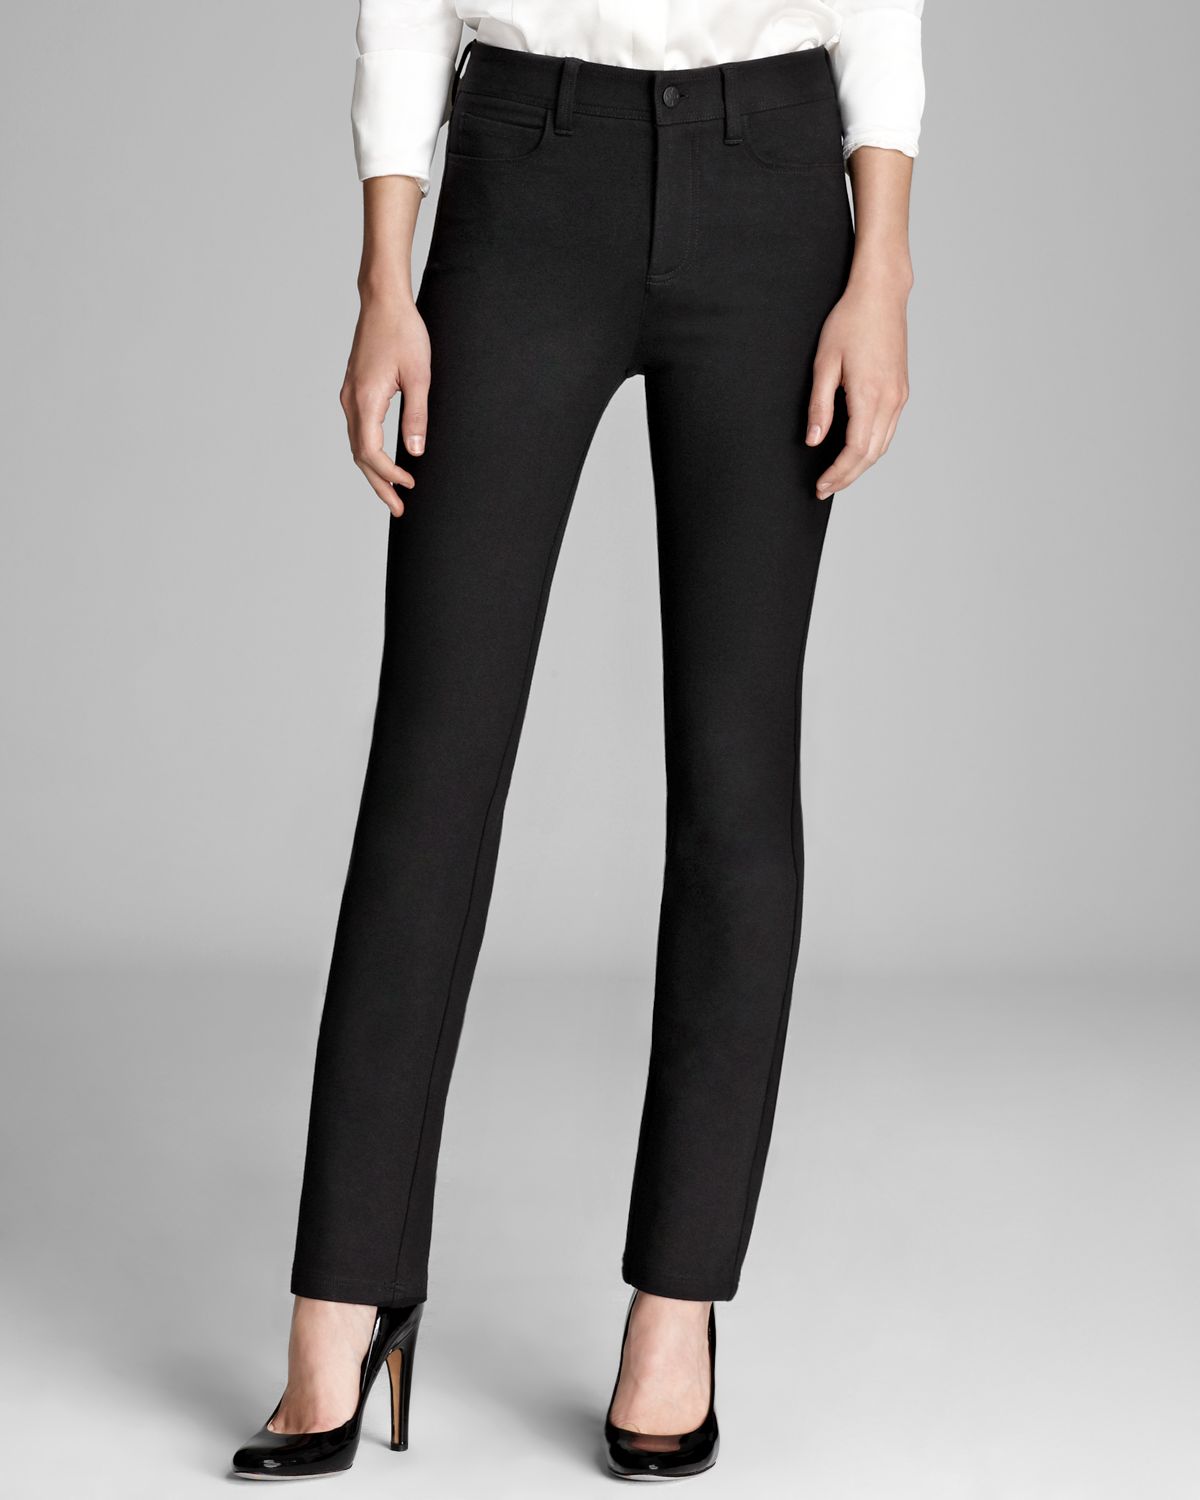 Nydj Five Pocket Basic Skinny Ponte Pants in Black | Lyst